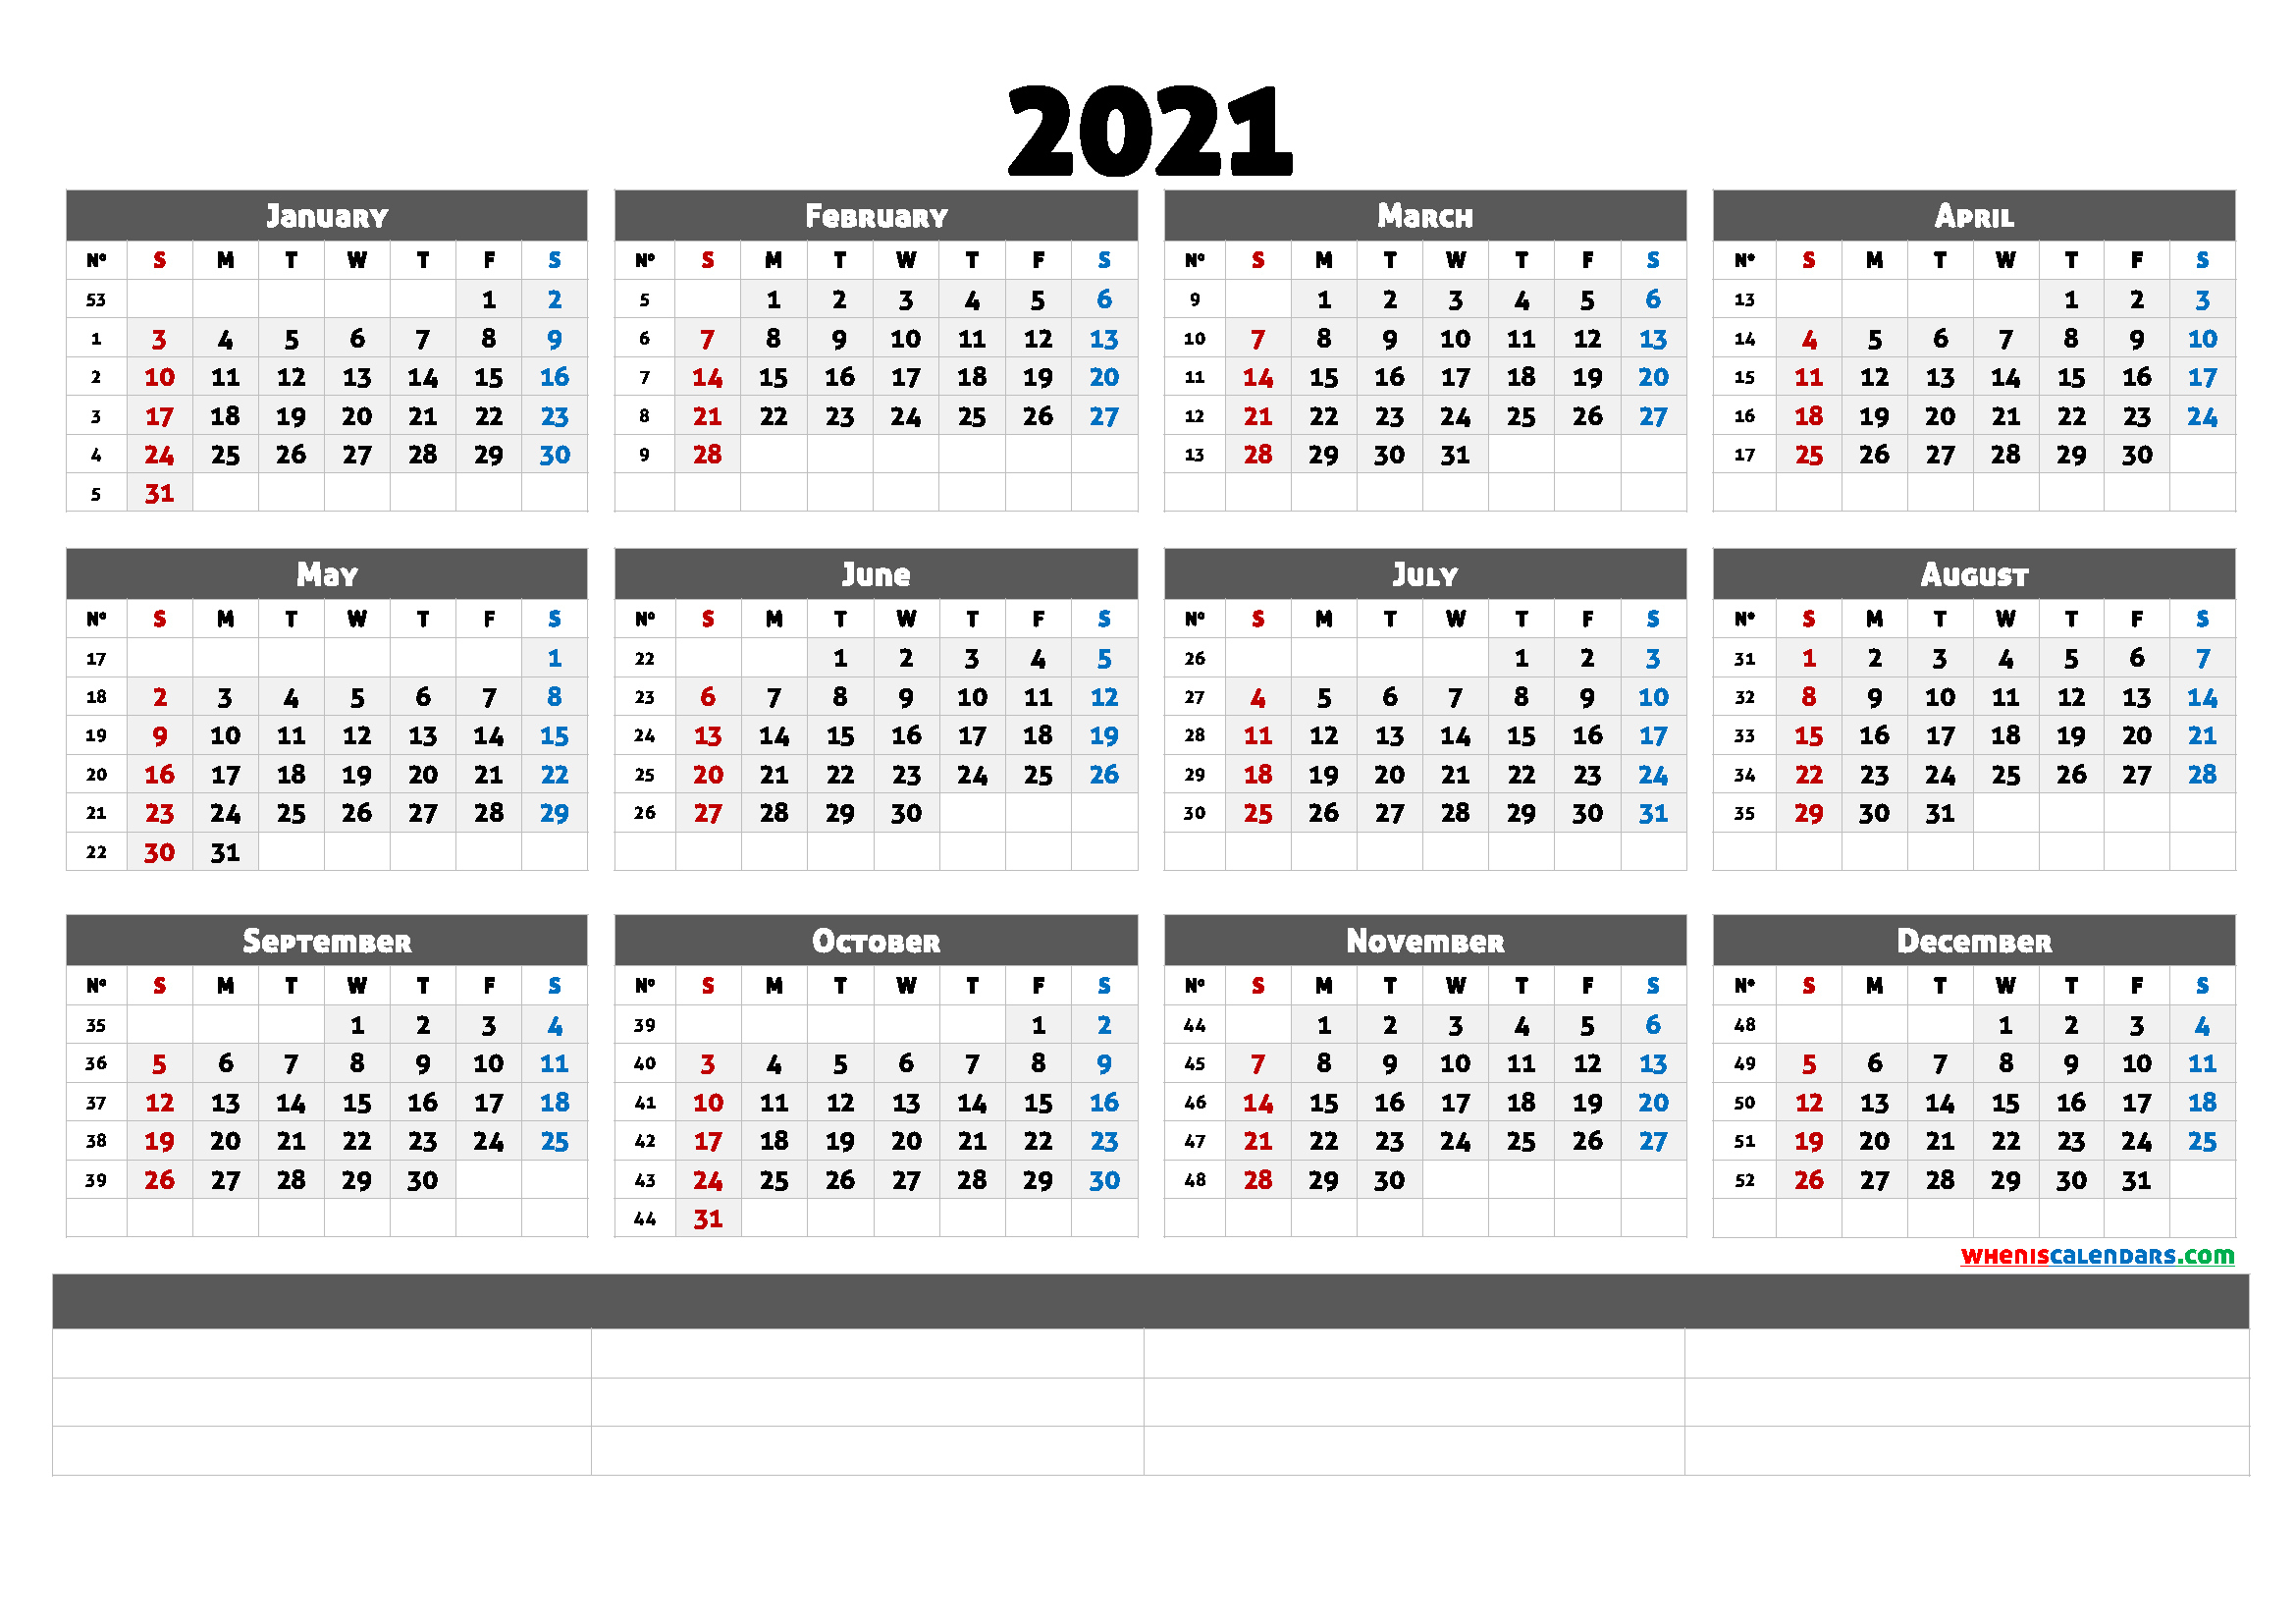 2021 Free Yearly Calendar Template Word (6 Templates) 6 Months Calendar Word